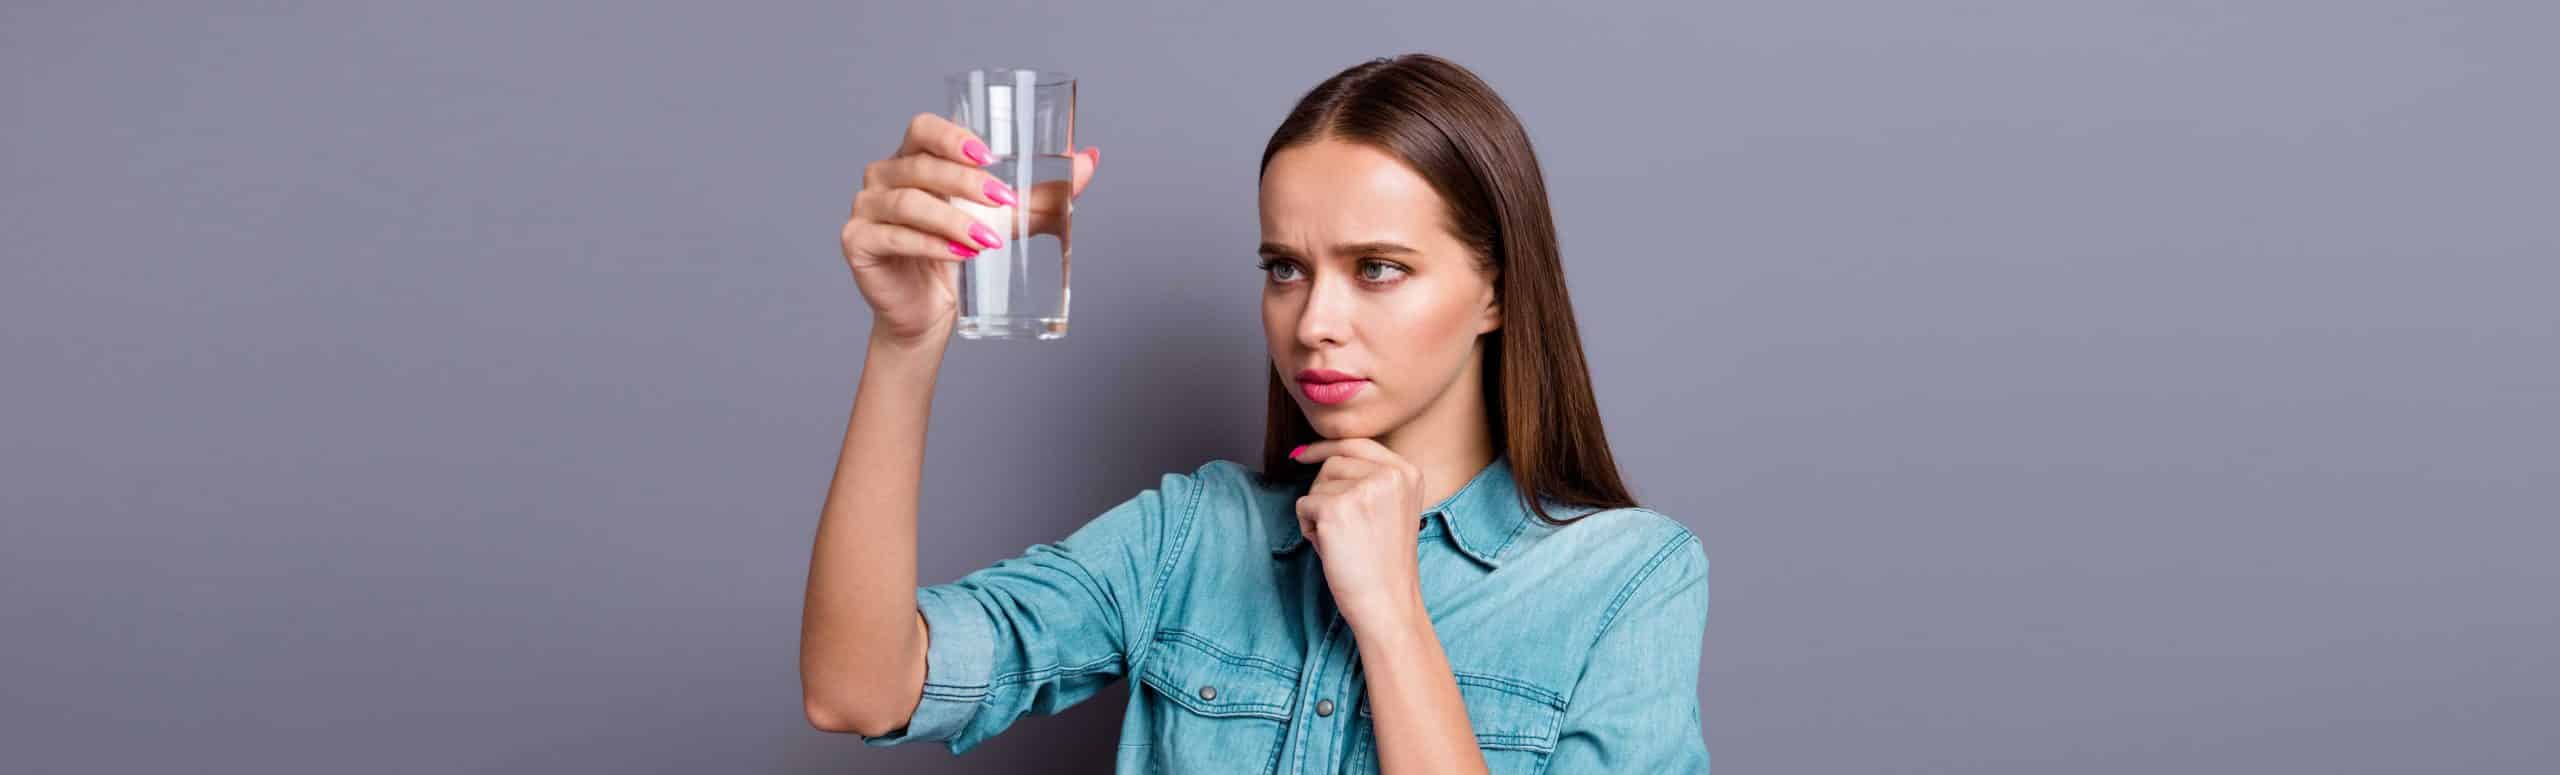 Woman analyzing a glass of water